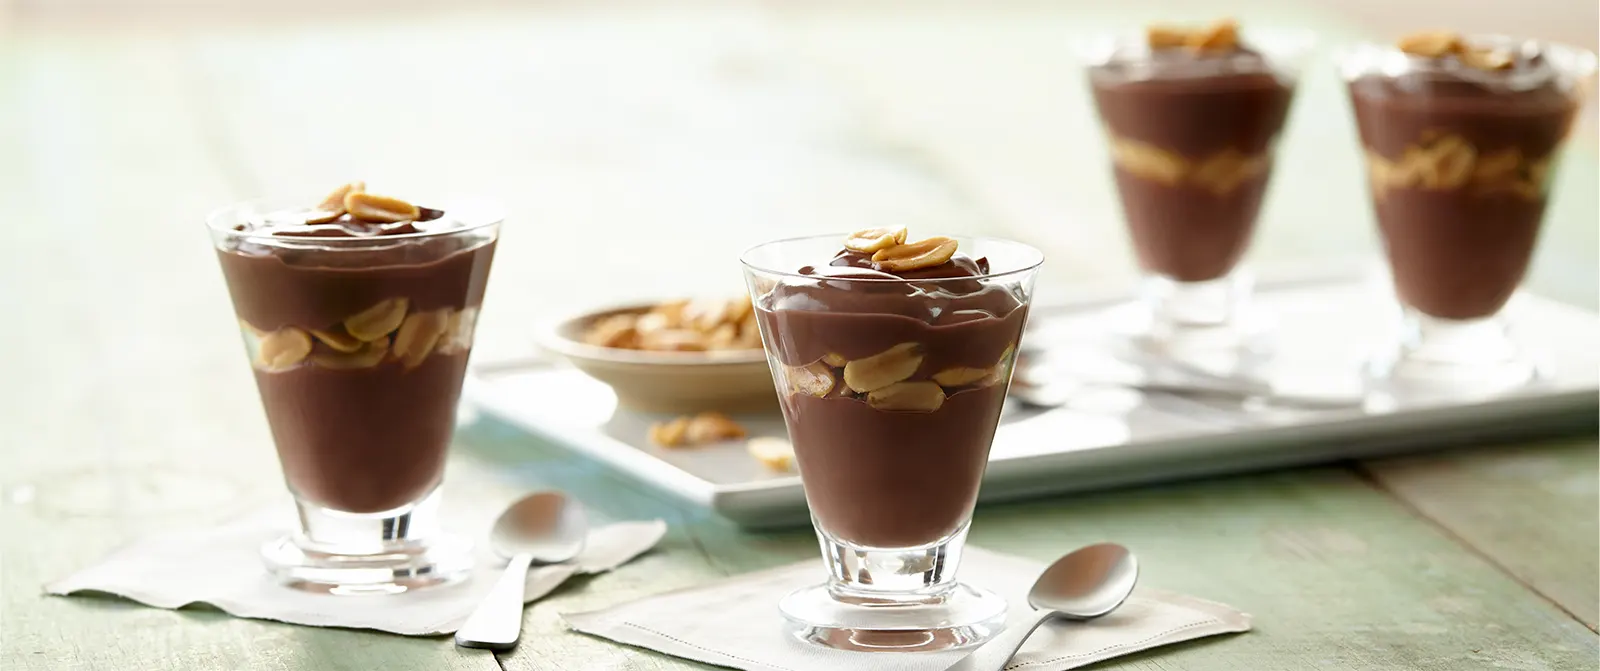 Simply Well<sup>®</sup> Chocolate Pudding